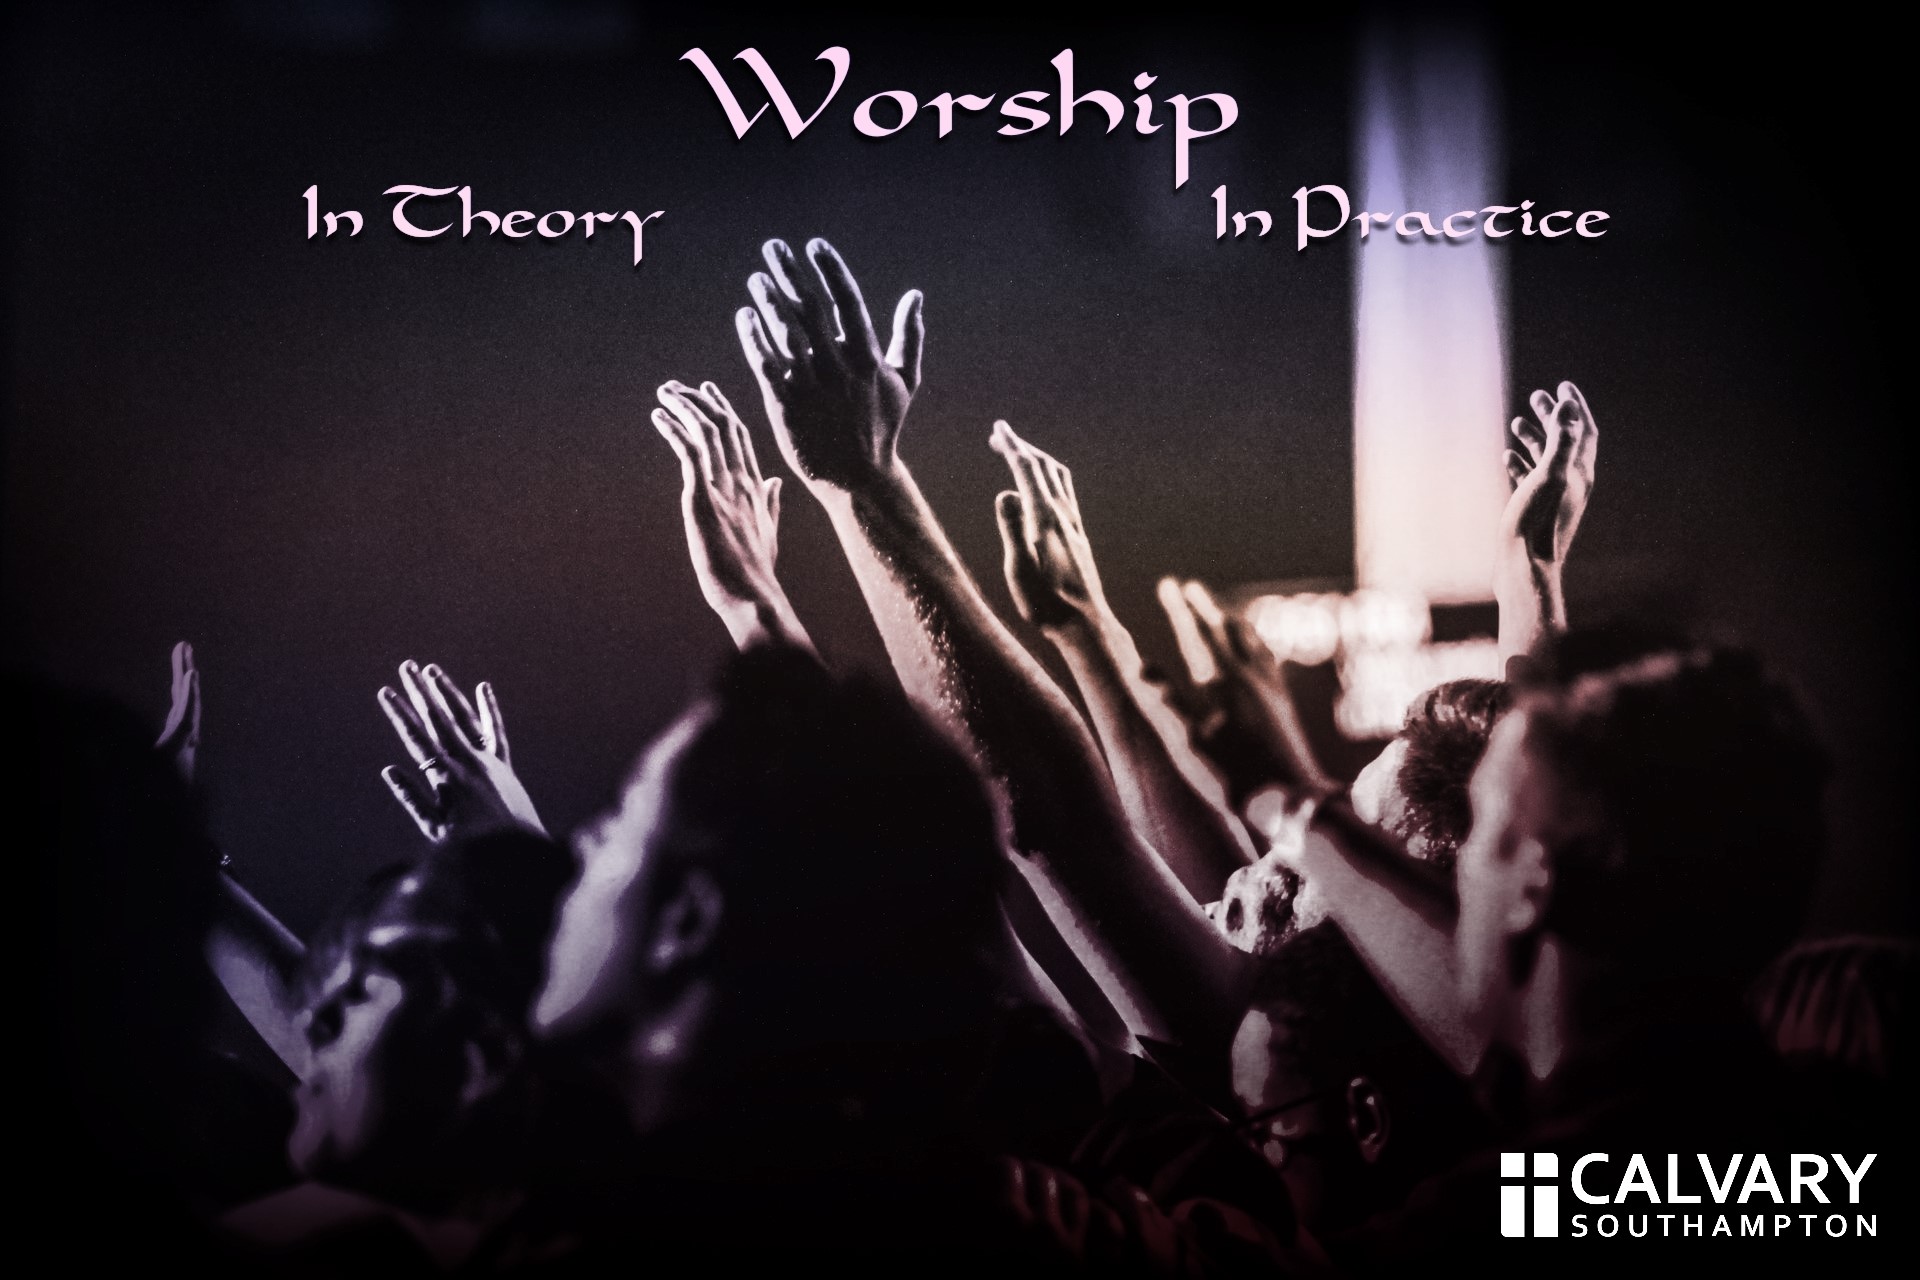 Worship in Practice